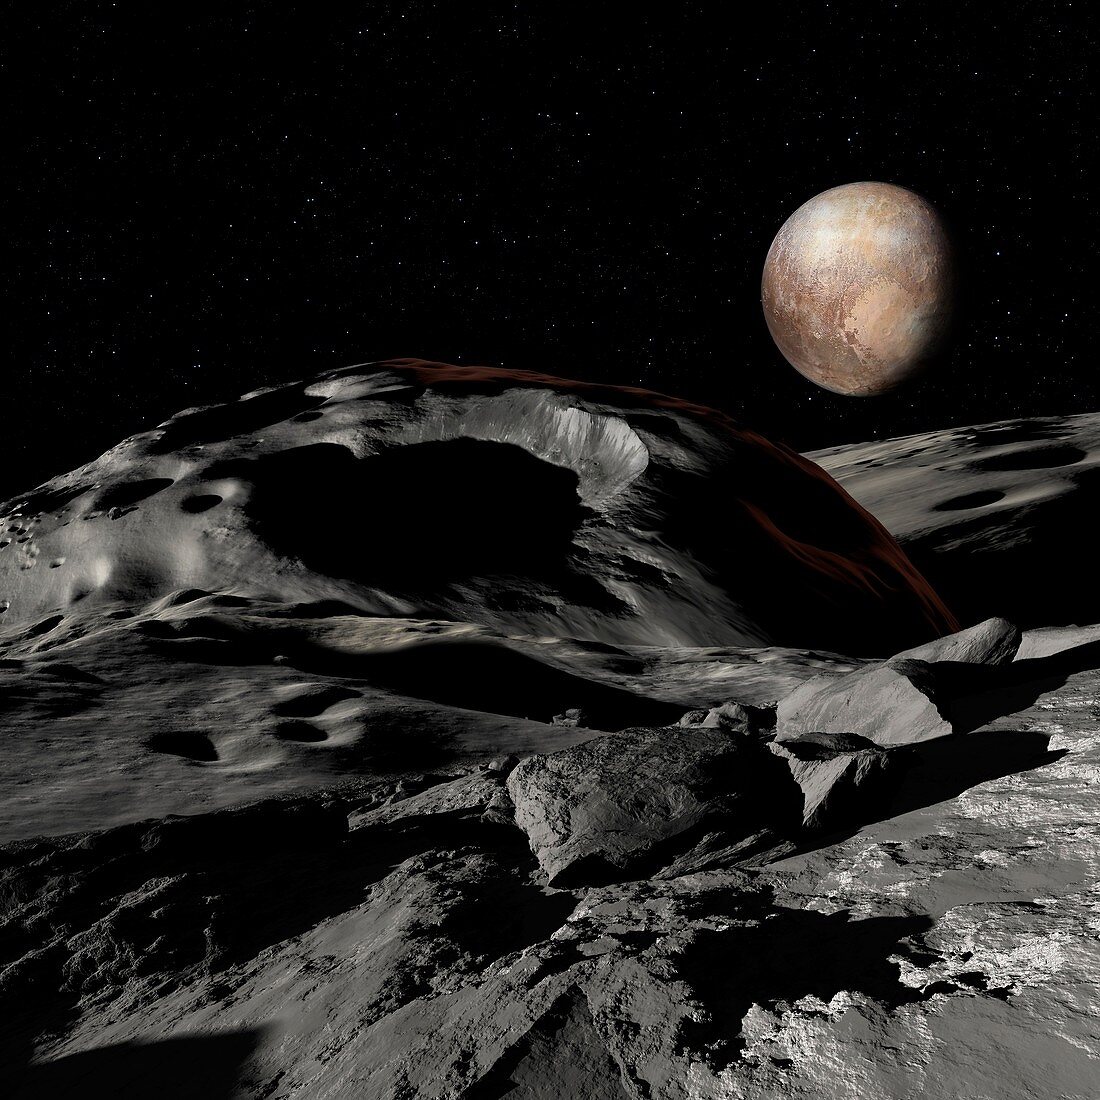 Pluto seen from Charon, illustration